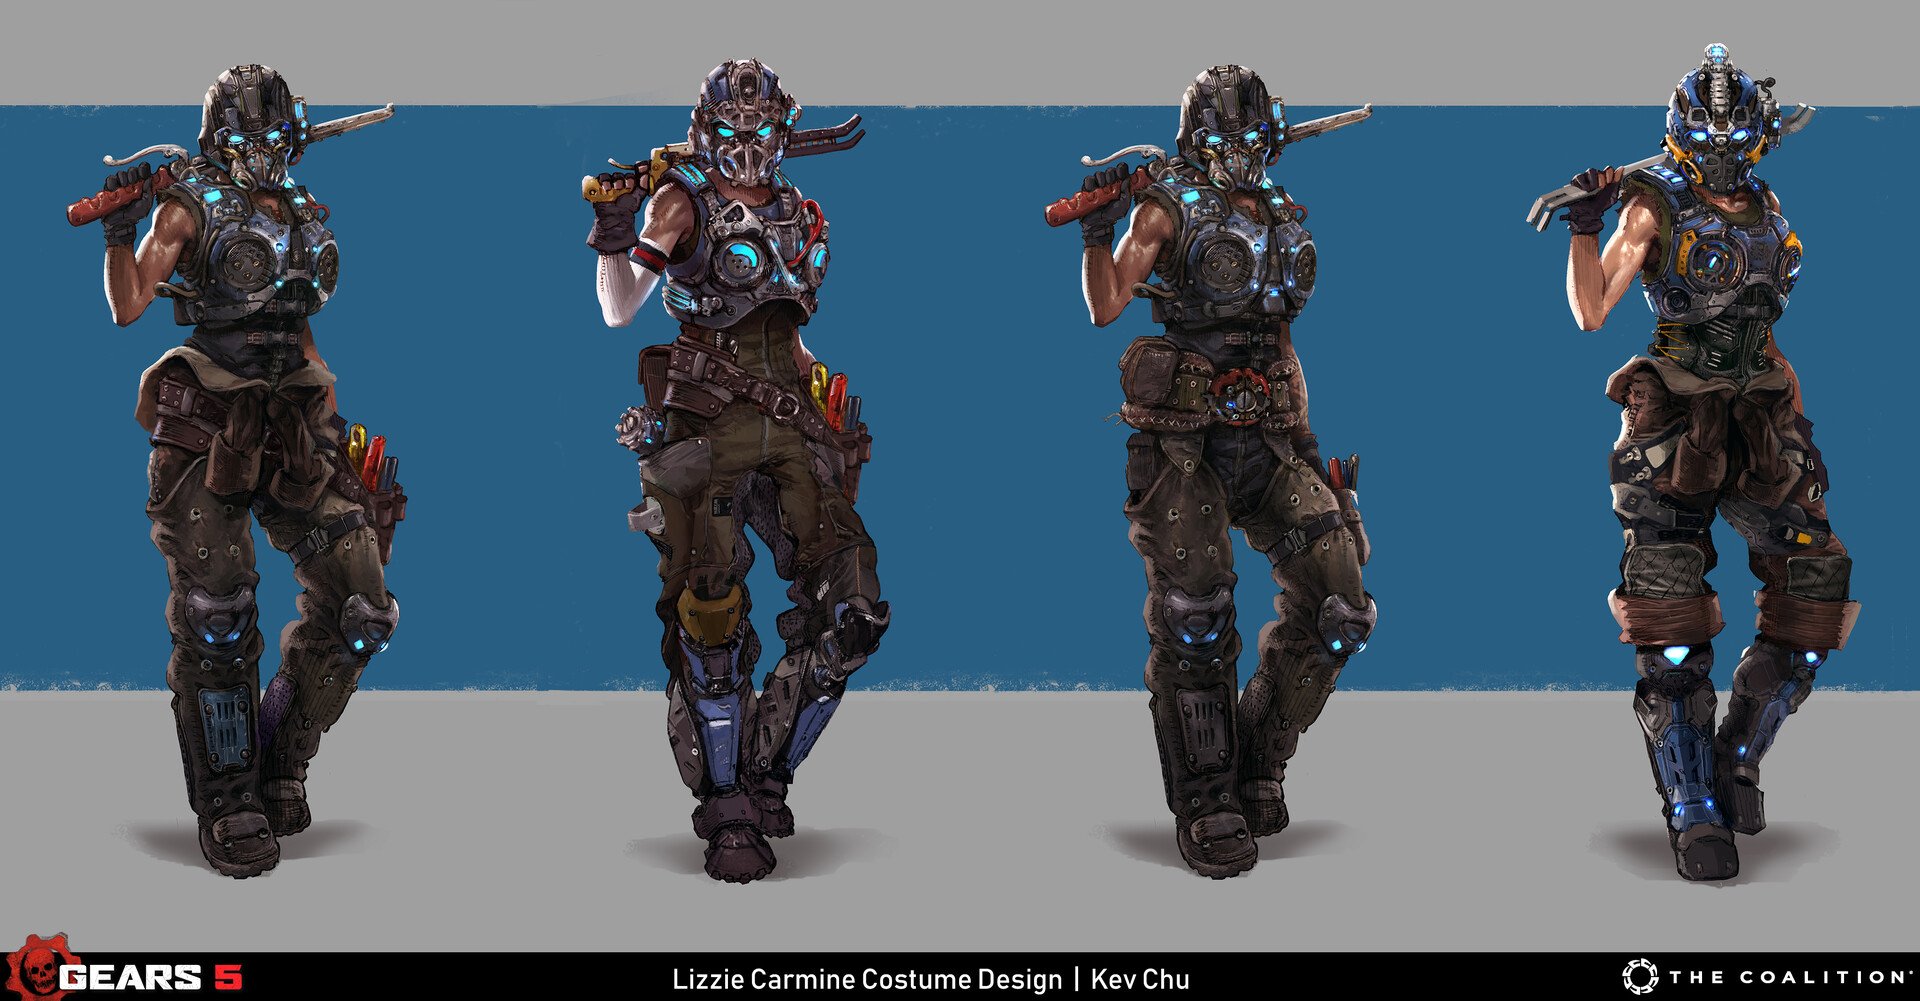 Gears Declassified - Latest on #GearsofWar on Twitter: "Elizabeth "Lizzie" Carmine  concept art by Kev Chu, Lead Concept Artist at The Coalition. #Gears5â¦ "